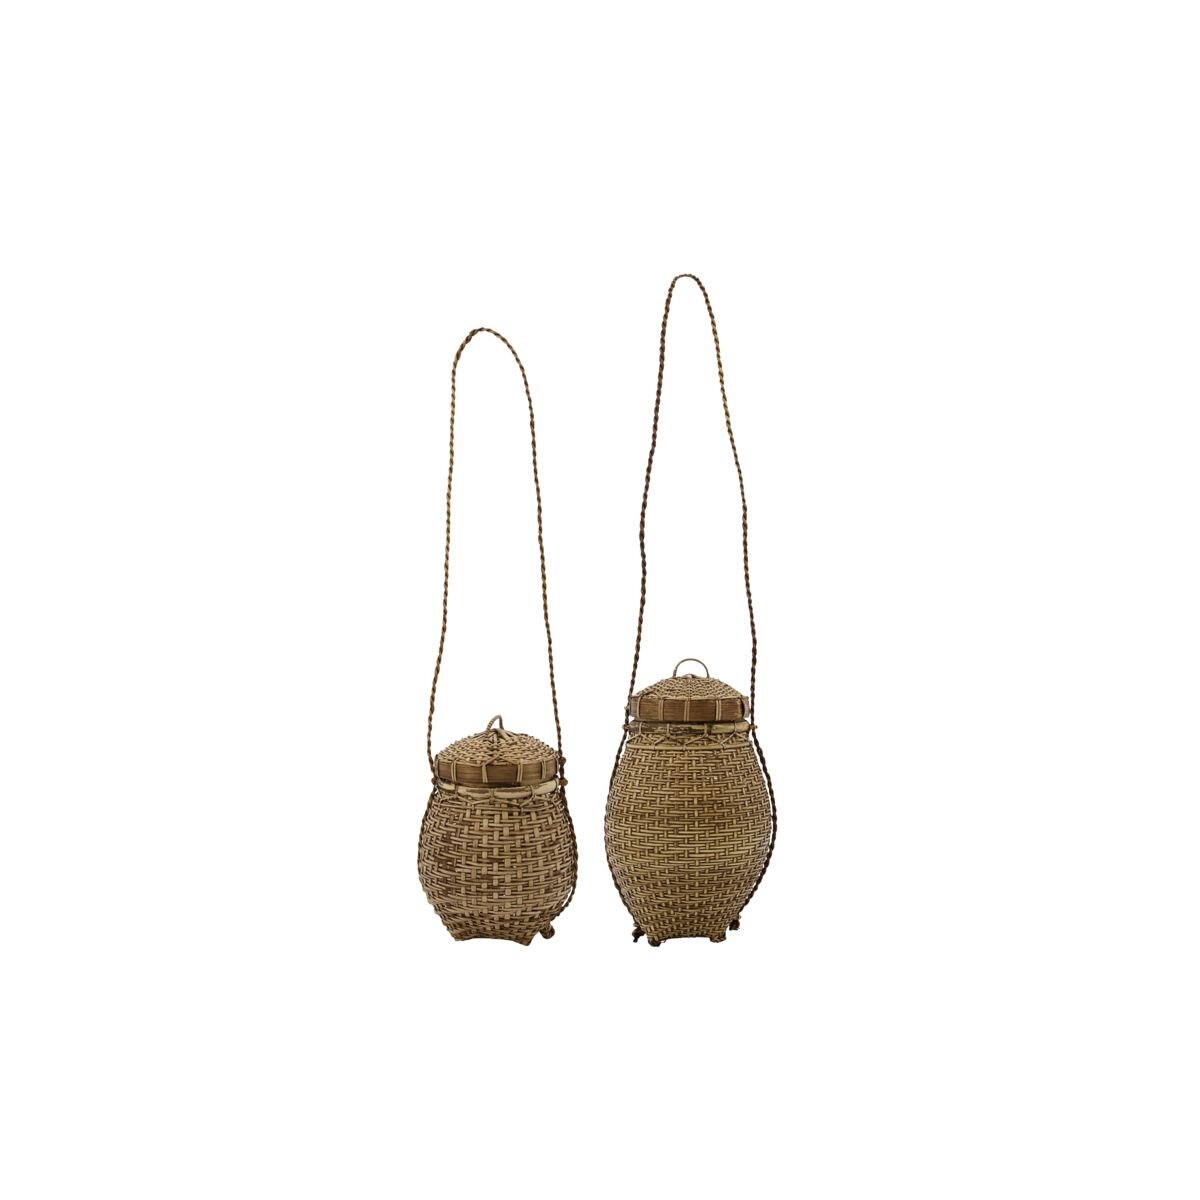 Balie - 2 rattan baskets 16 and 31 cm